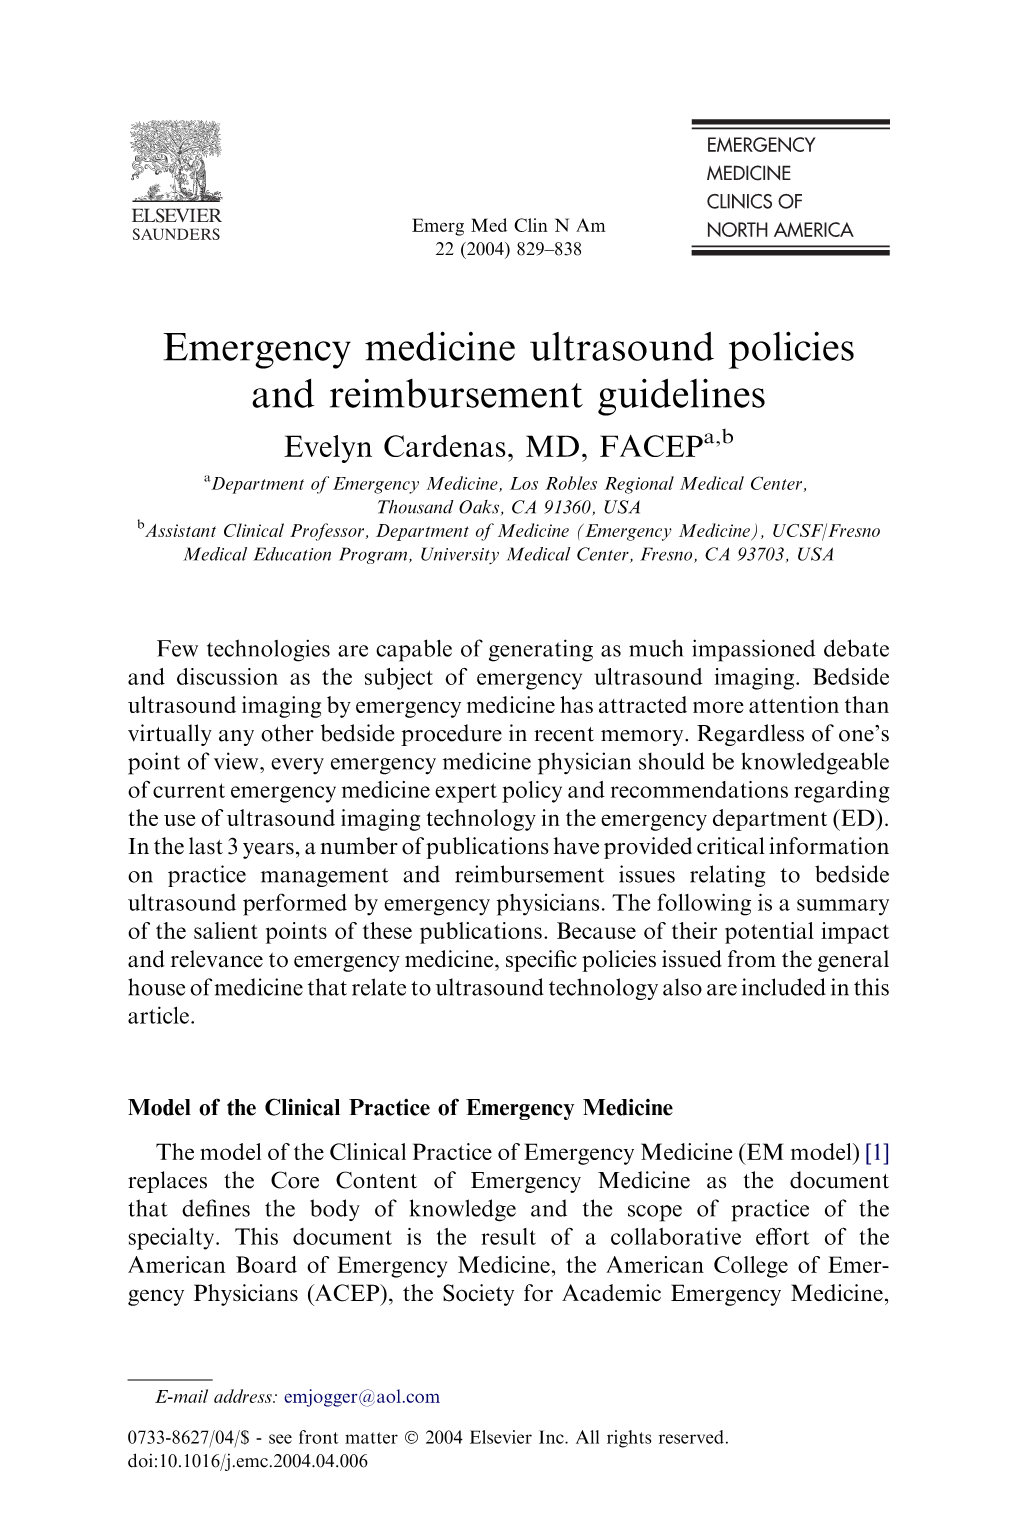 Emergency Medicine Ultrasound Policies and Reimbursement